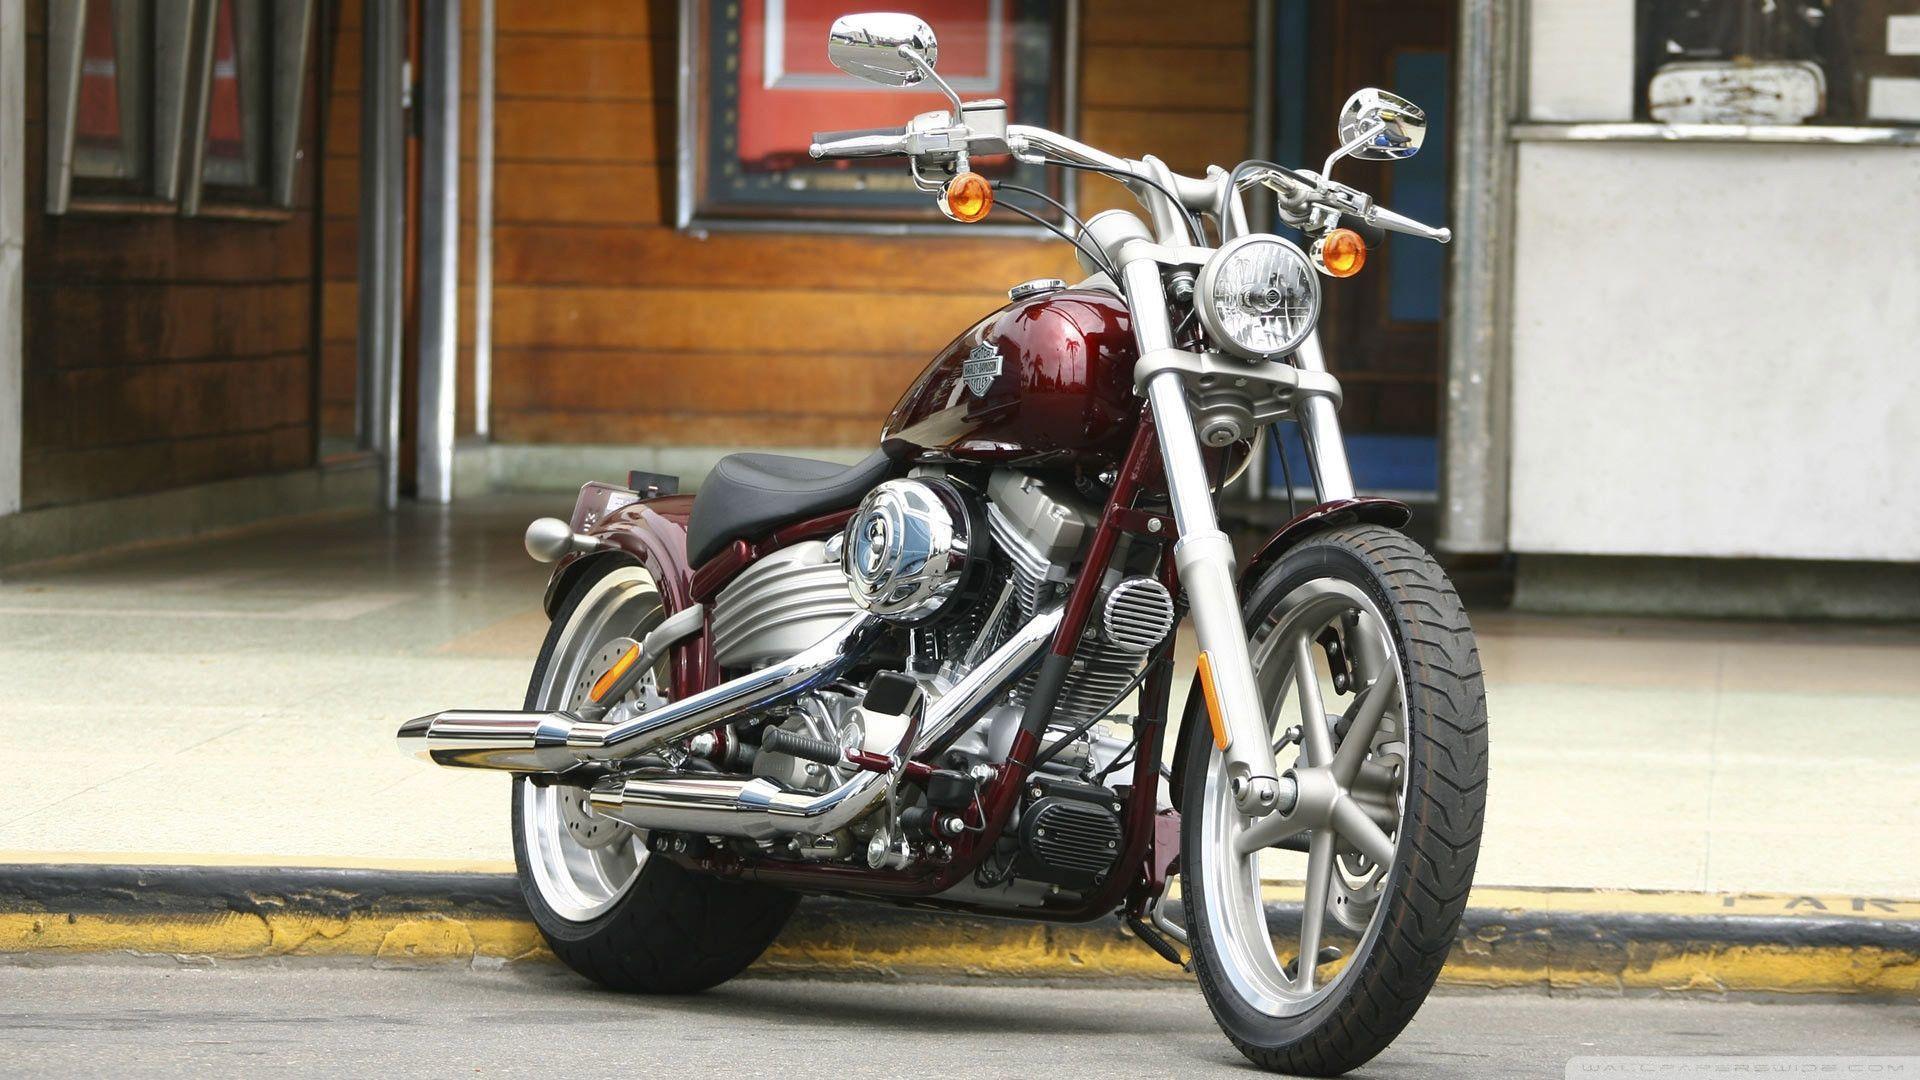 Harley Davidson Motorcycle wallpaper